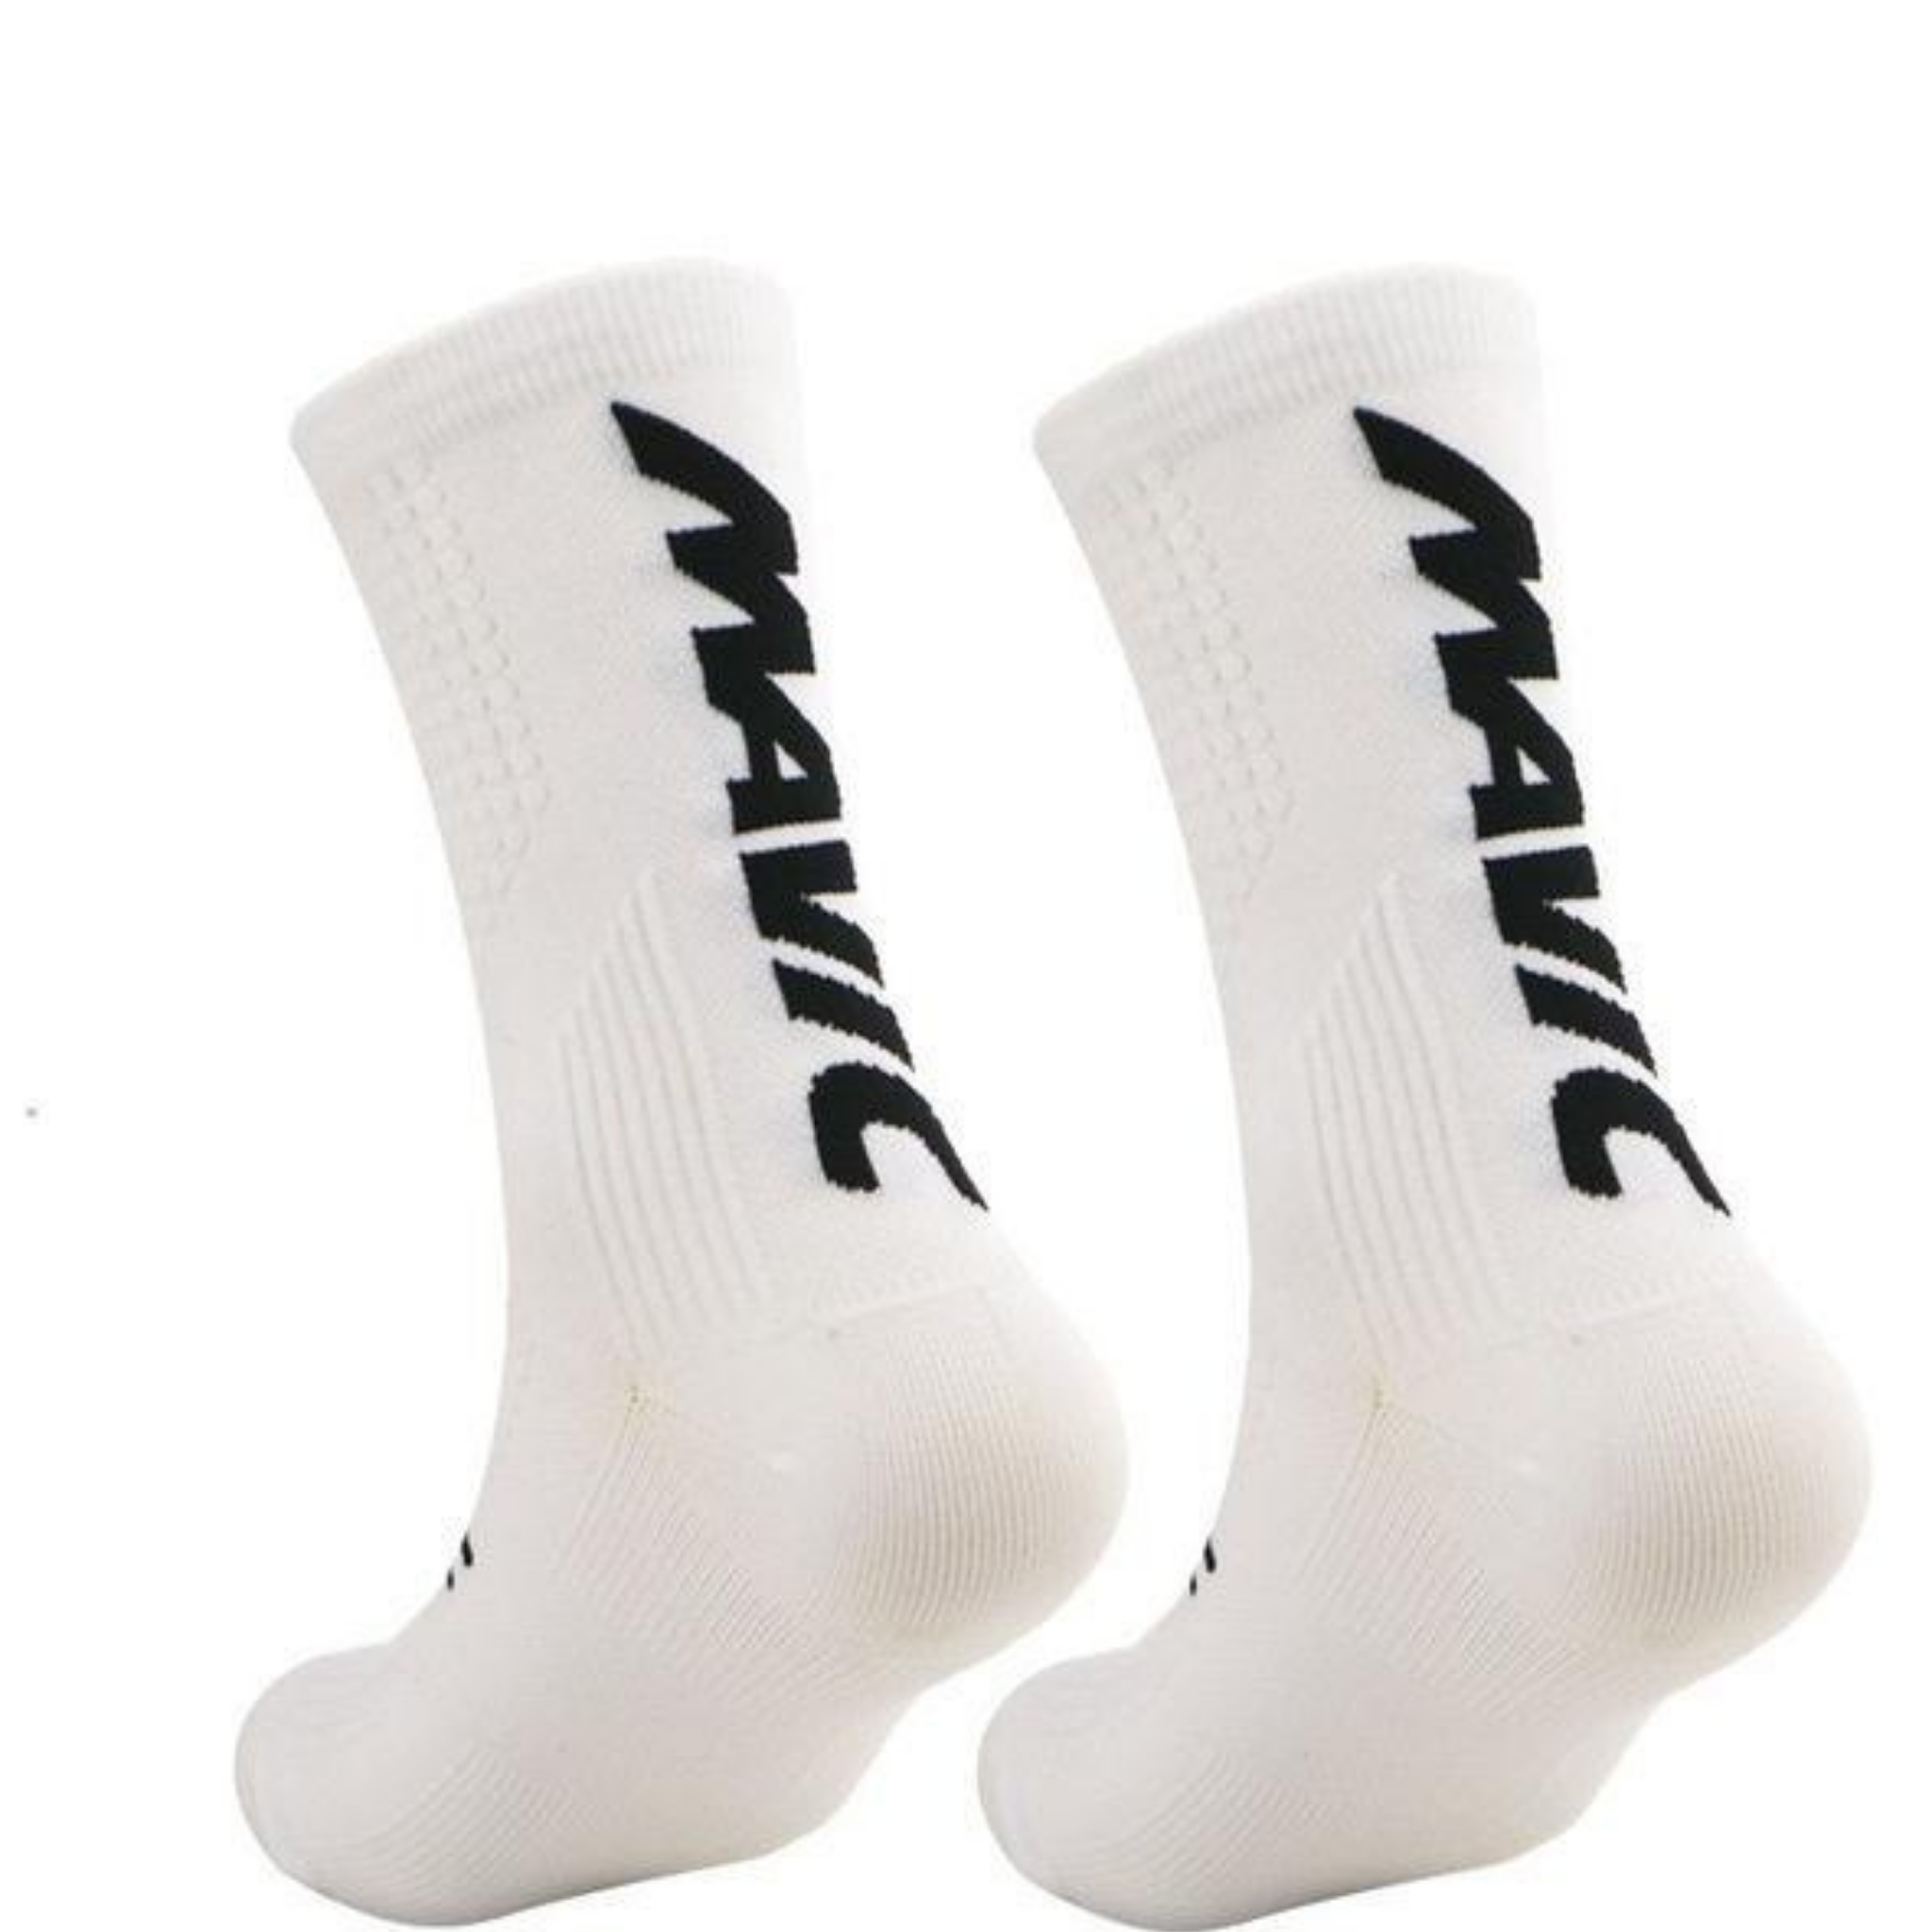 Coolmax Unisex Cycling Socks - Wet Nose Buddy